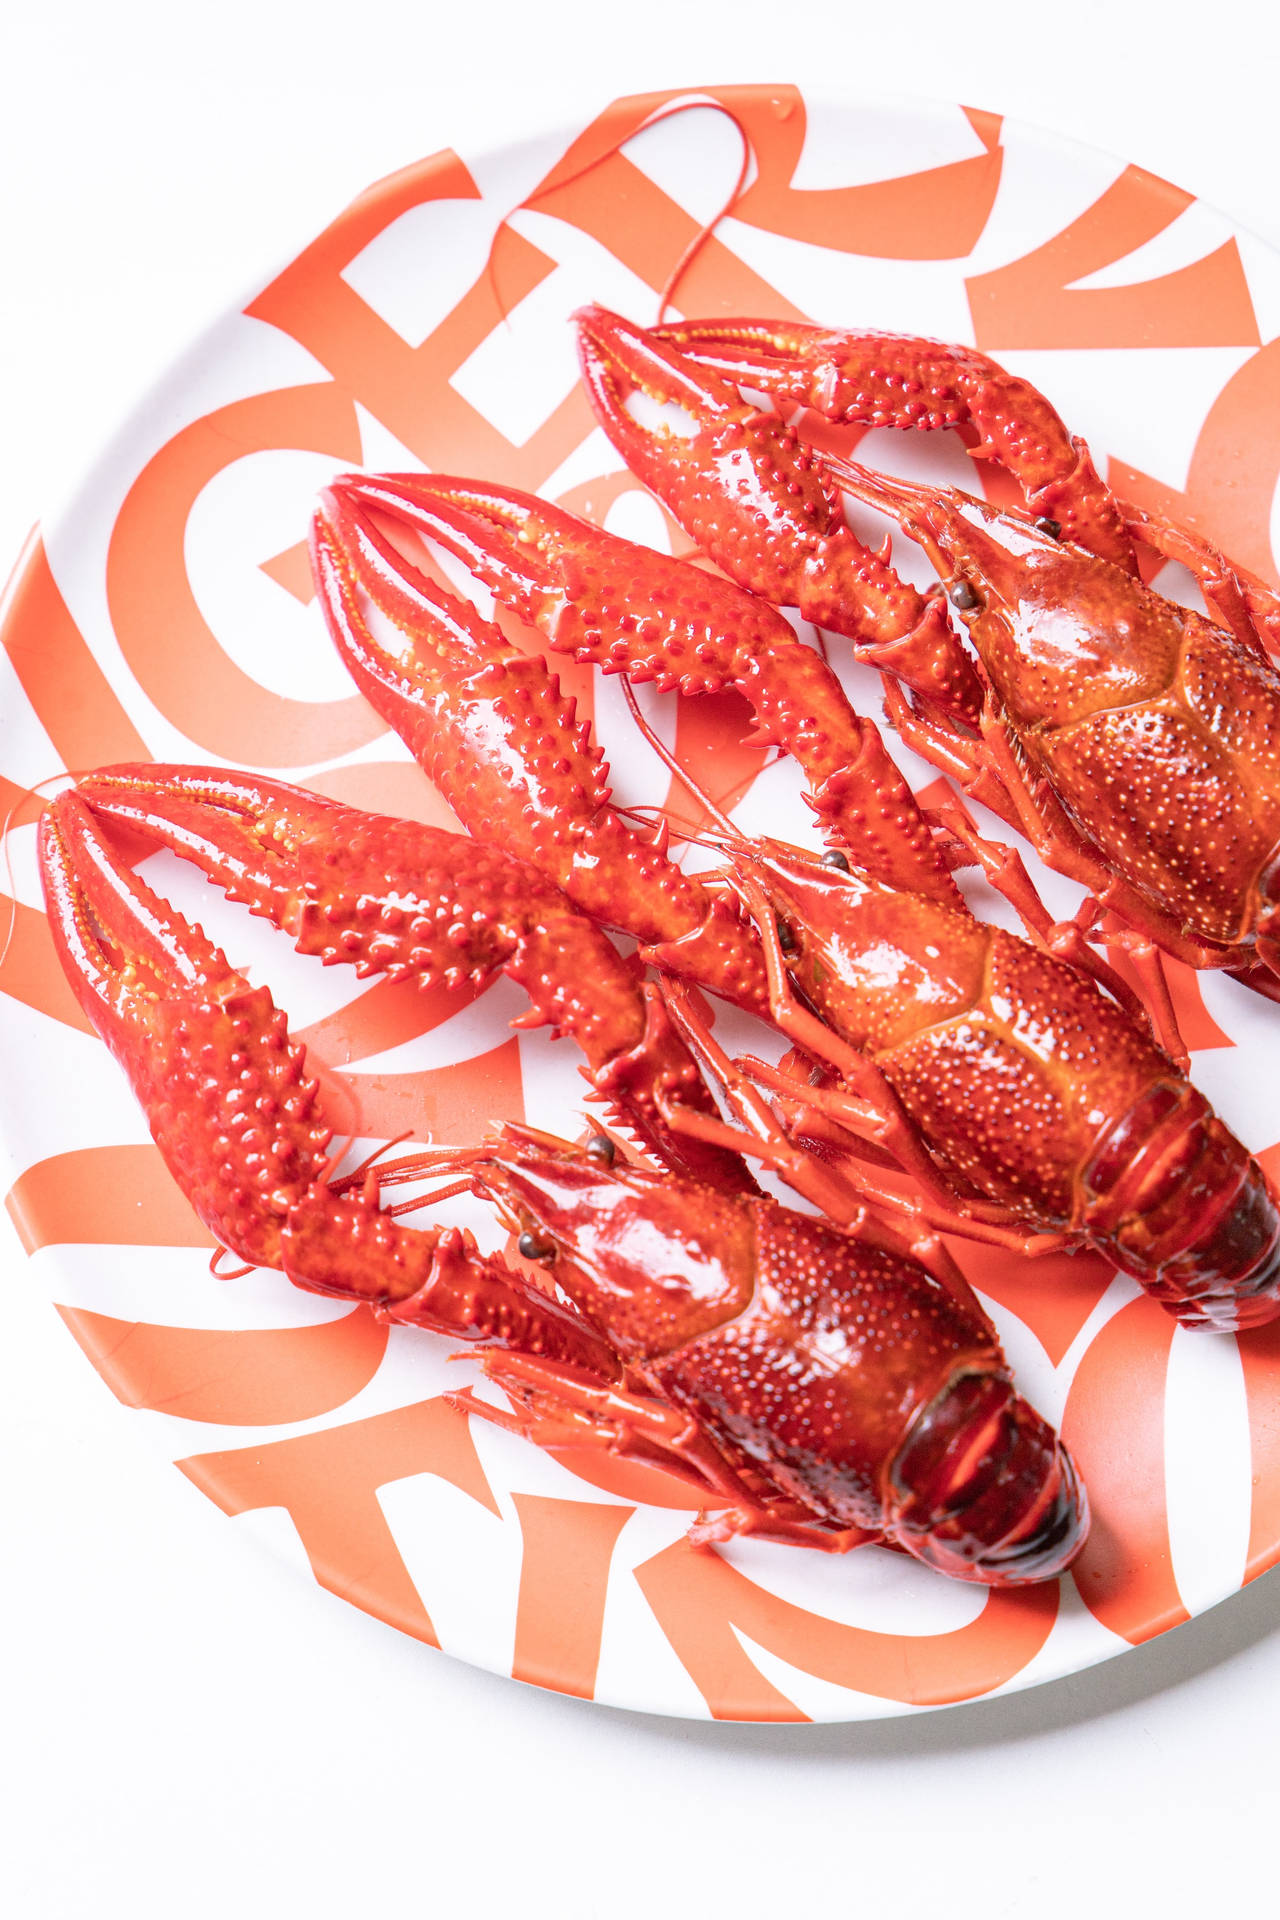 Crayfish Dish In Orange Plate Wallpaper